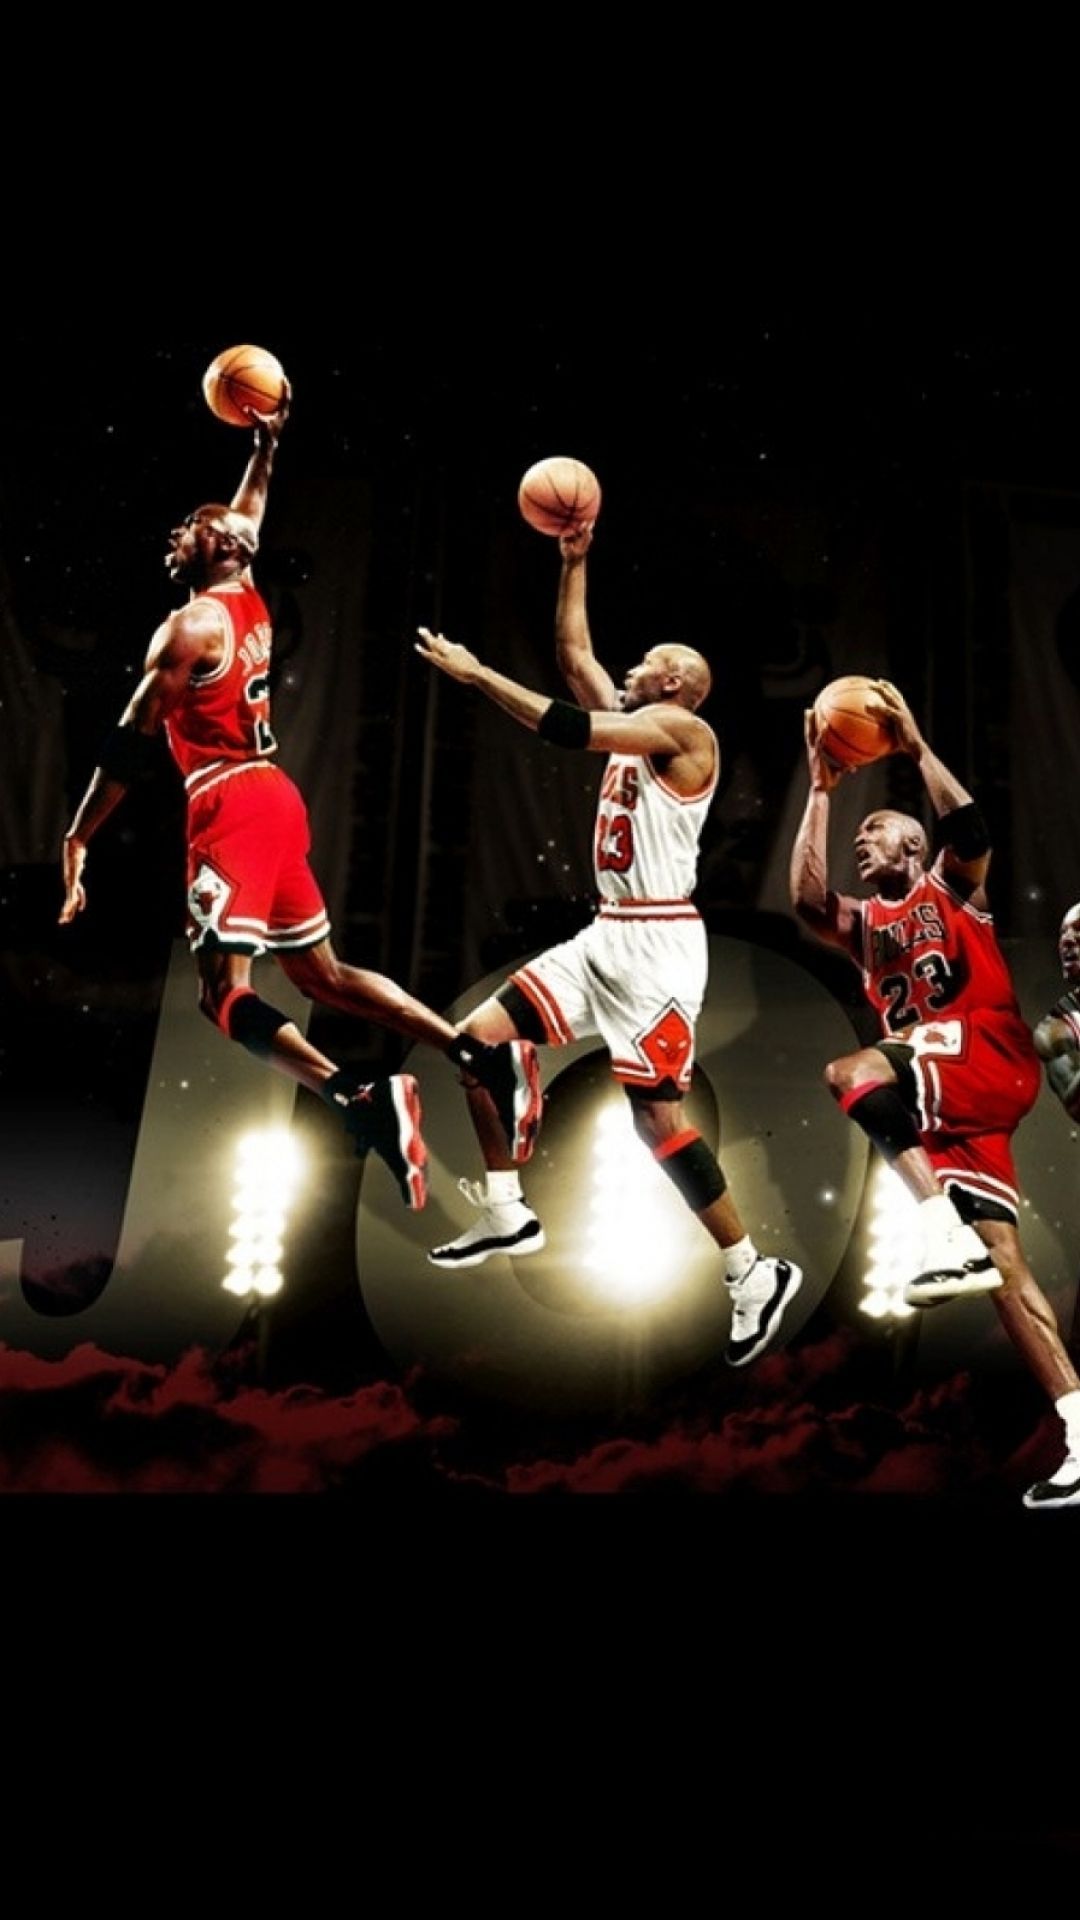 iPhone 6 Plus - Sports/Michael Jordan - Wallpaper ID: 517830